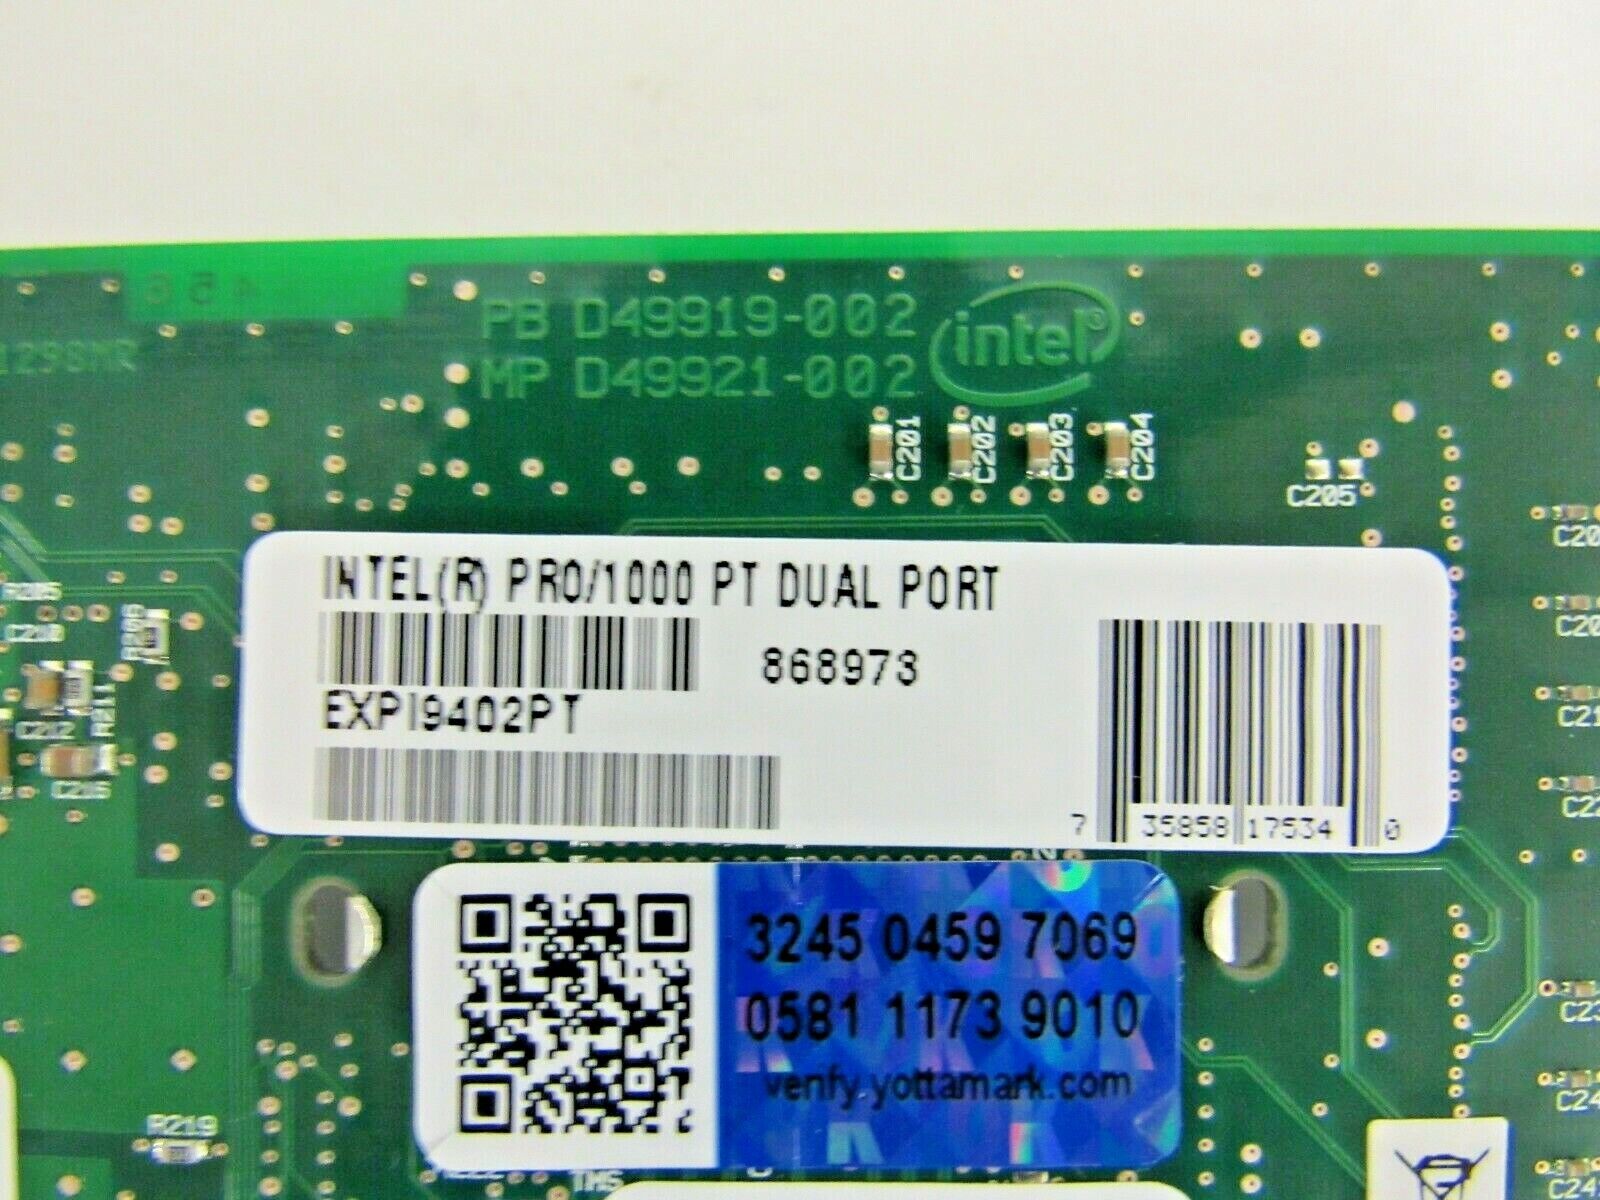 Intel EXPI9402PT Pro/1000 PT Dual Port 1Gbps PCIe x4 Adapter w/ Hologram    57-2